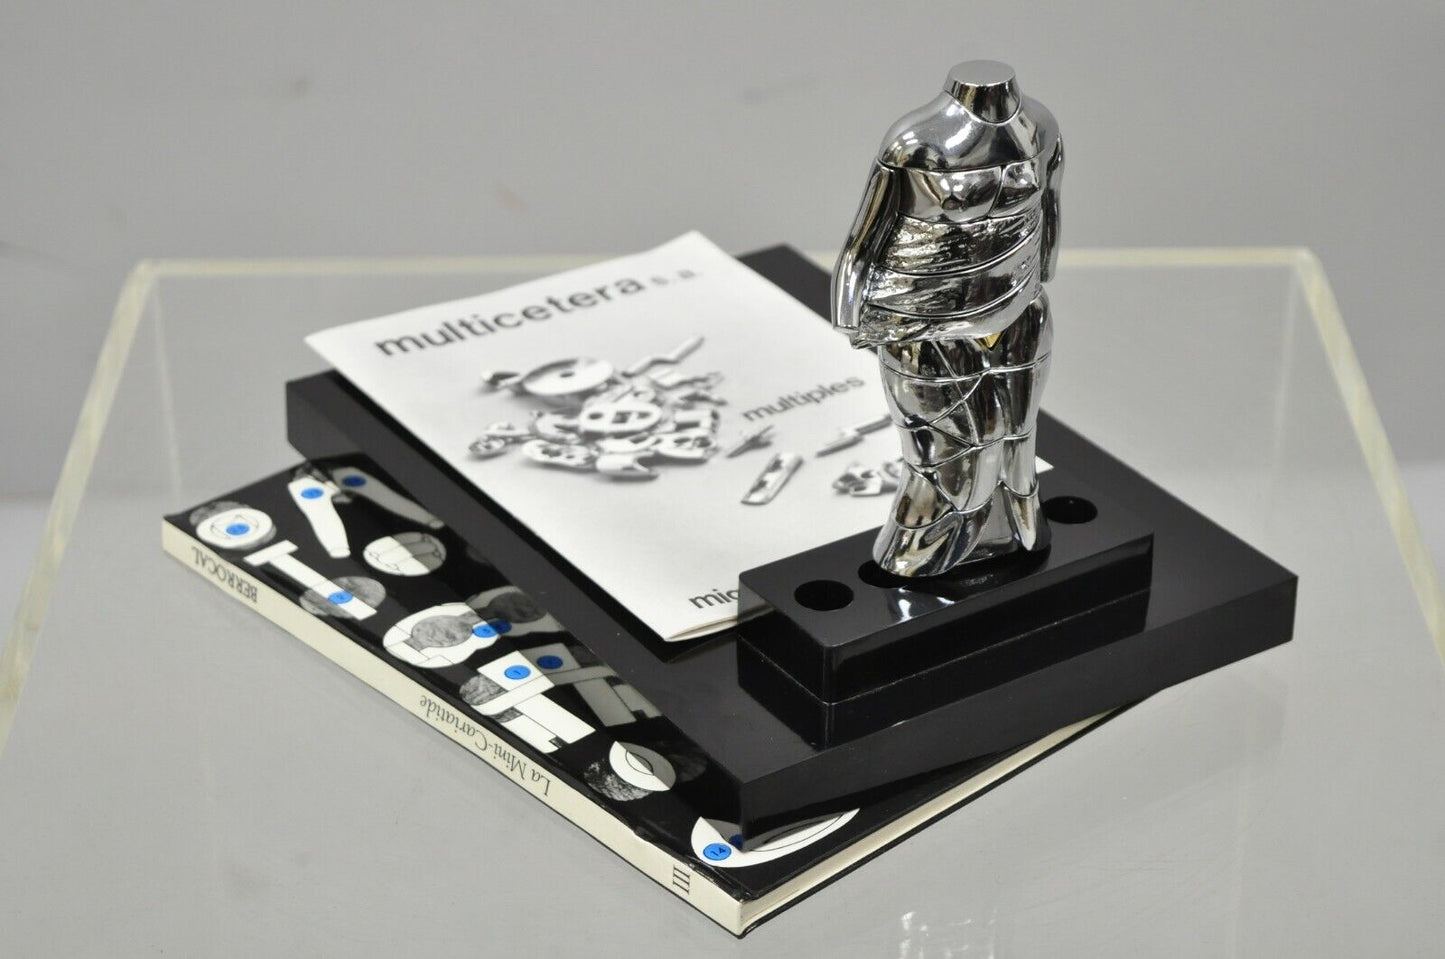 Miguel Berrocal La Mini Cariatide Nickel Plated Puzzle Sculpture Box and Book